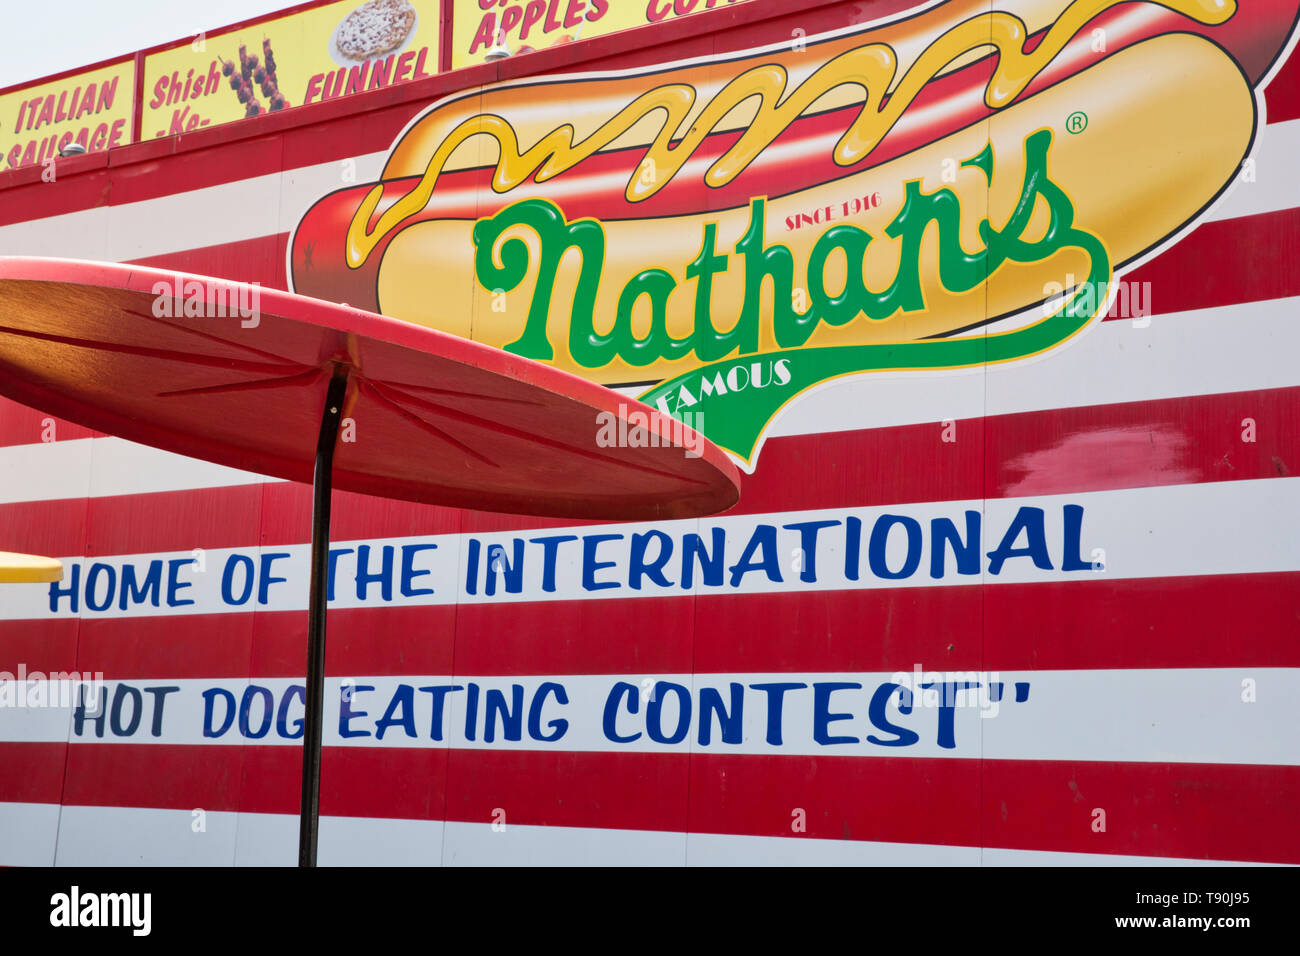 Nathans international hot dog eatng content Coney Island Stock Photo